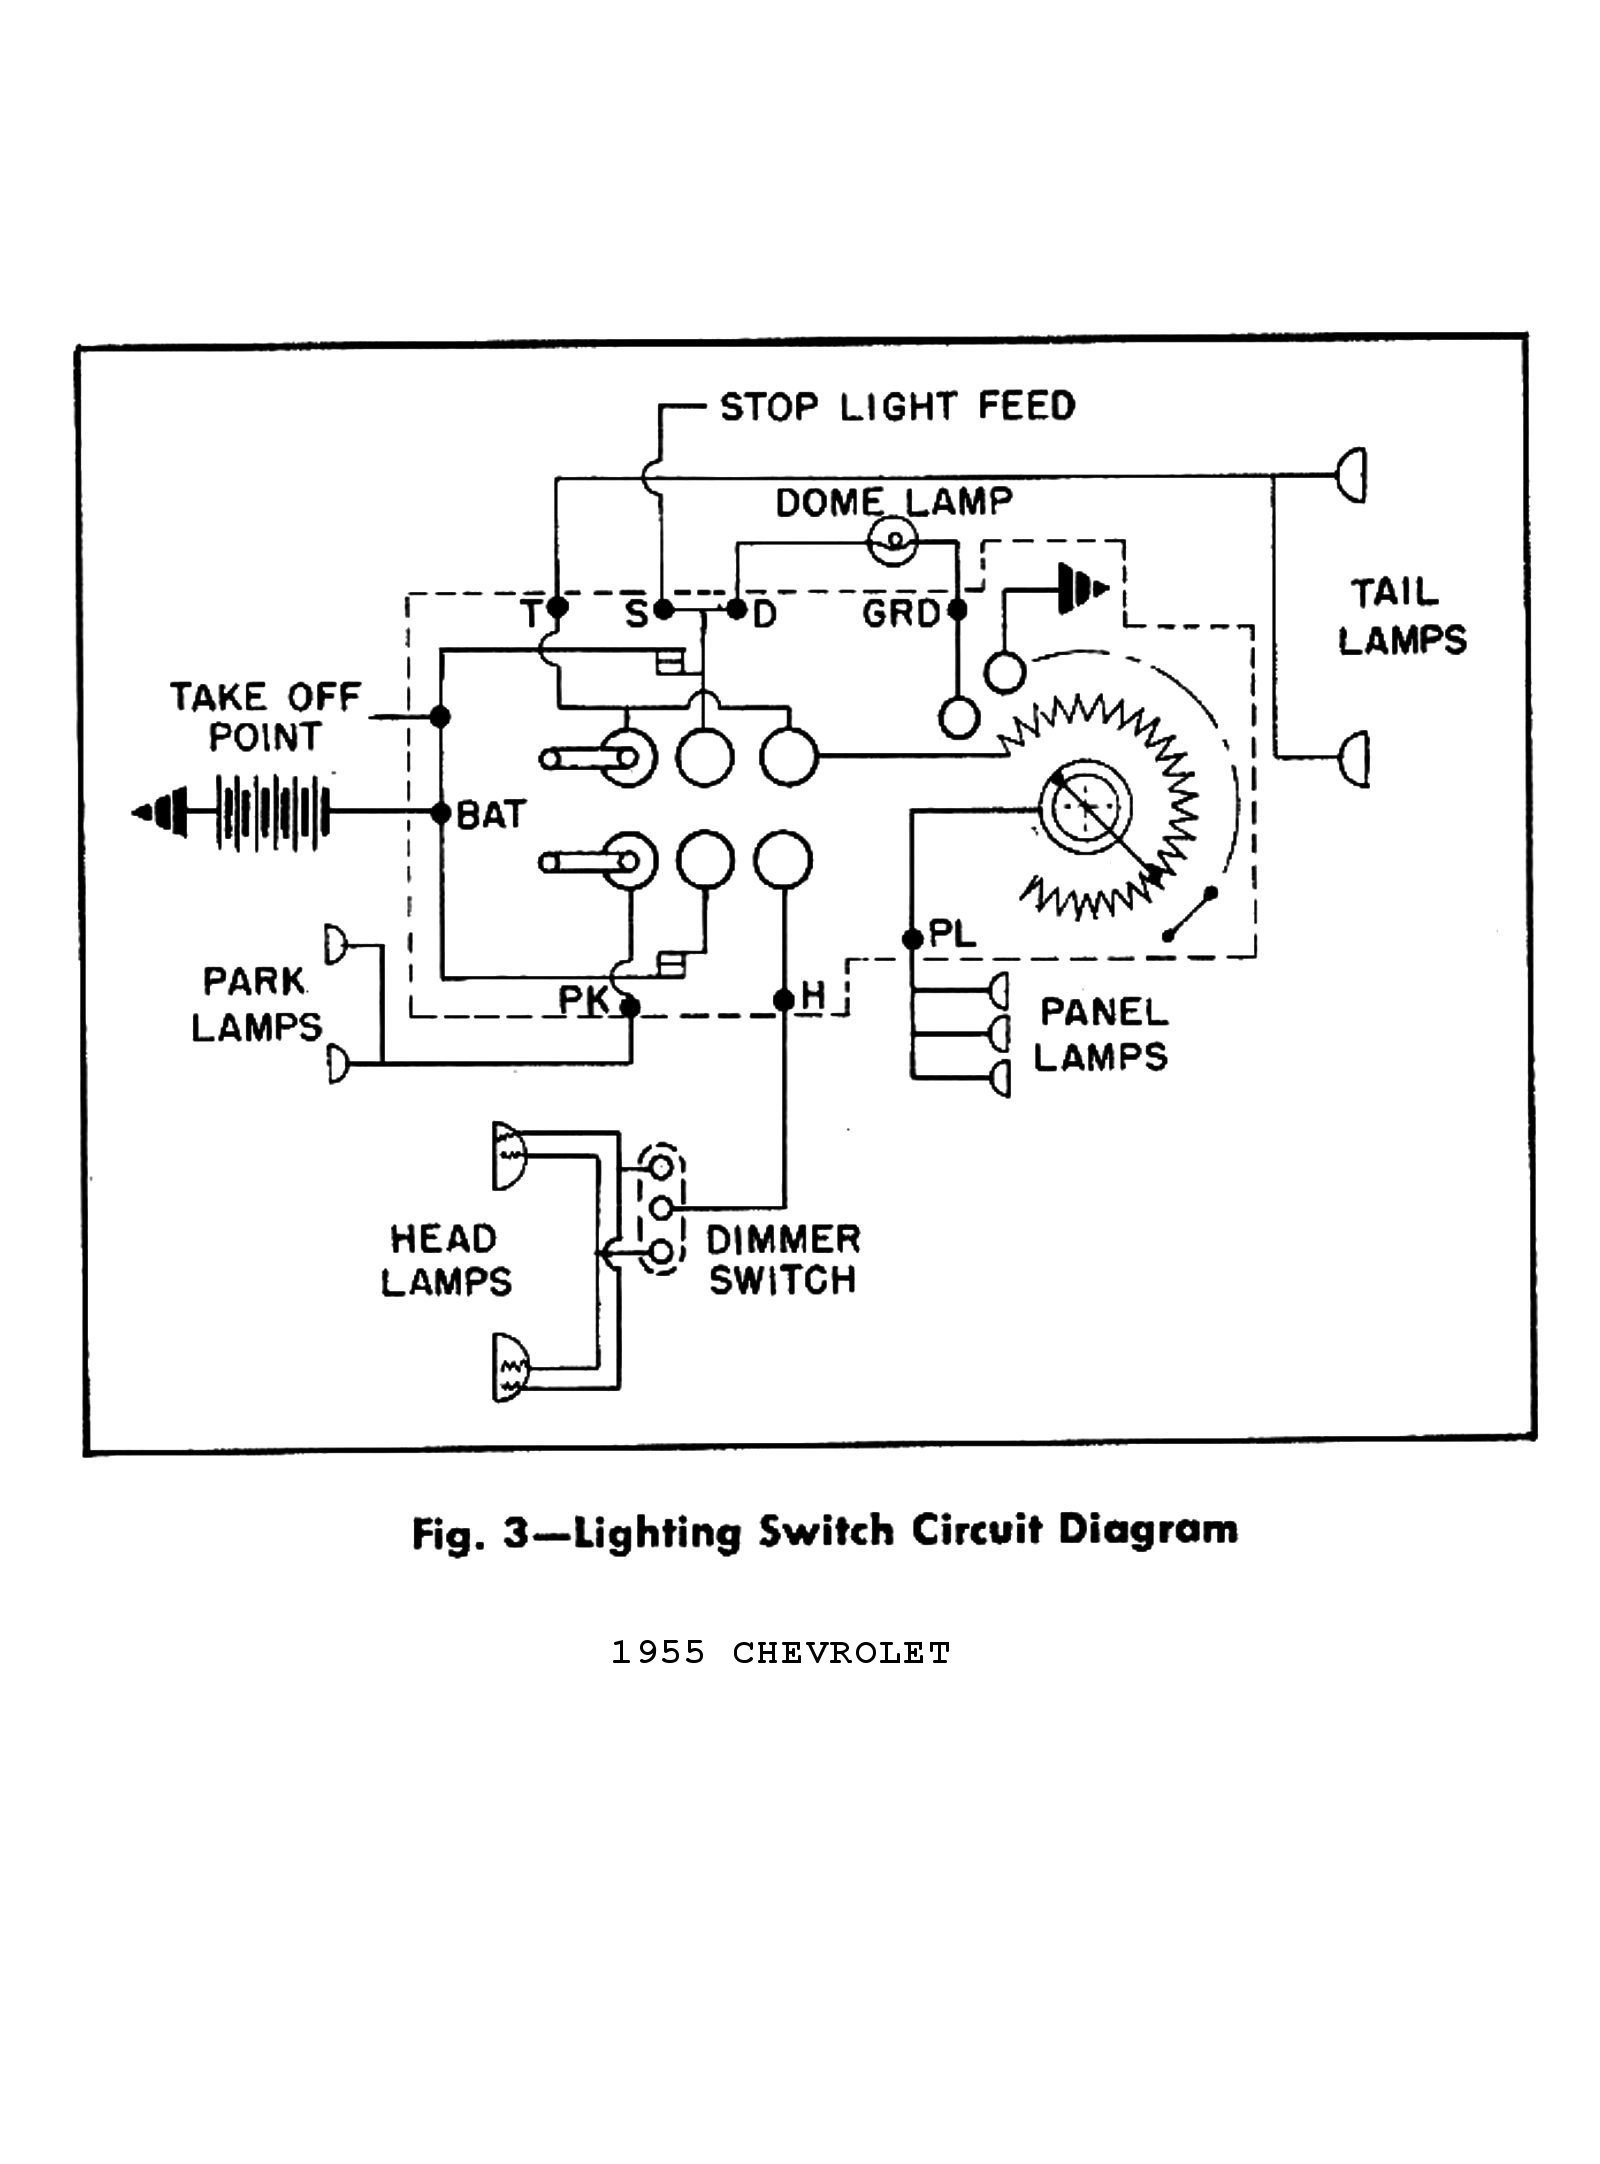 Car Dome Light Wiring Diagram 1955 Passenger Car Wiring 2 1955 Lighting Switch Circuit Wiring Info • Of Car Dome Light Wiring Diagram